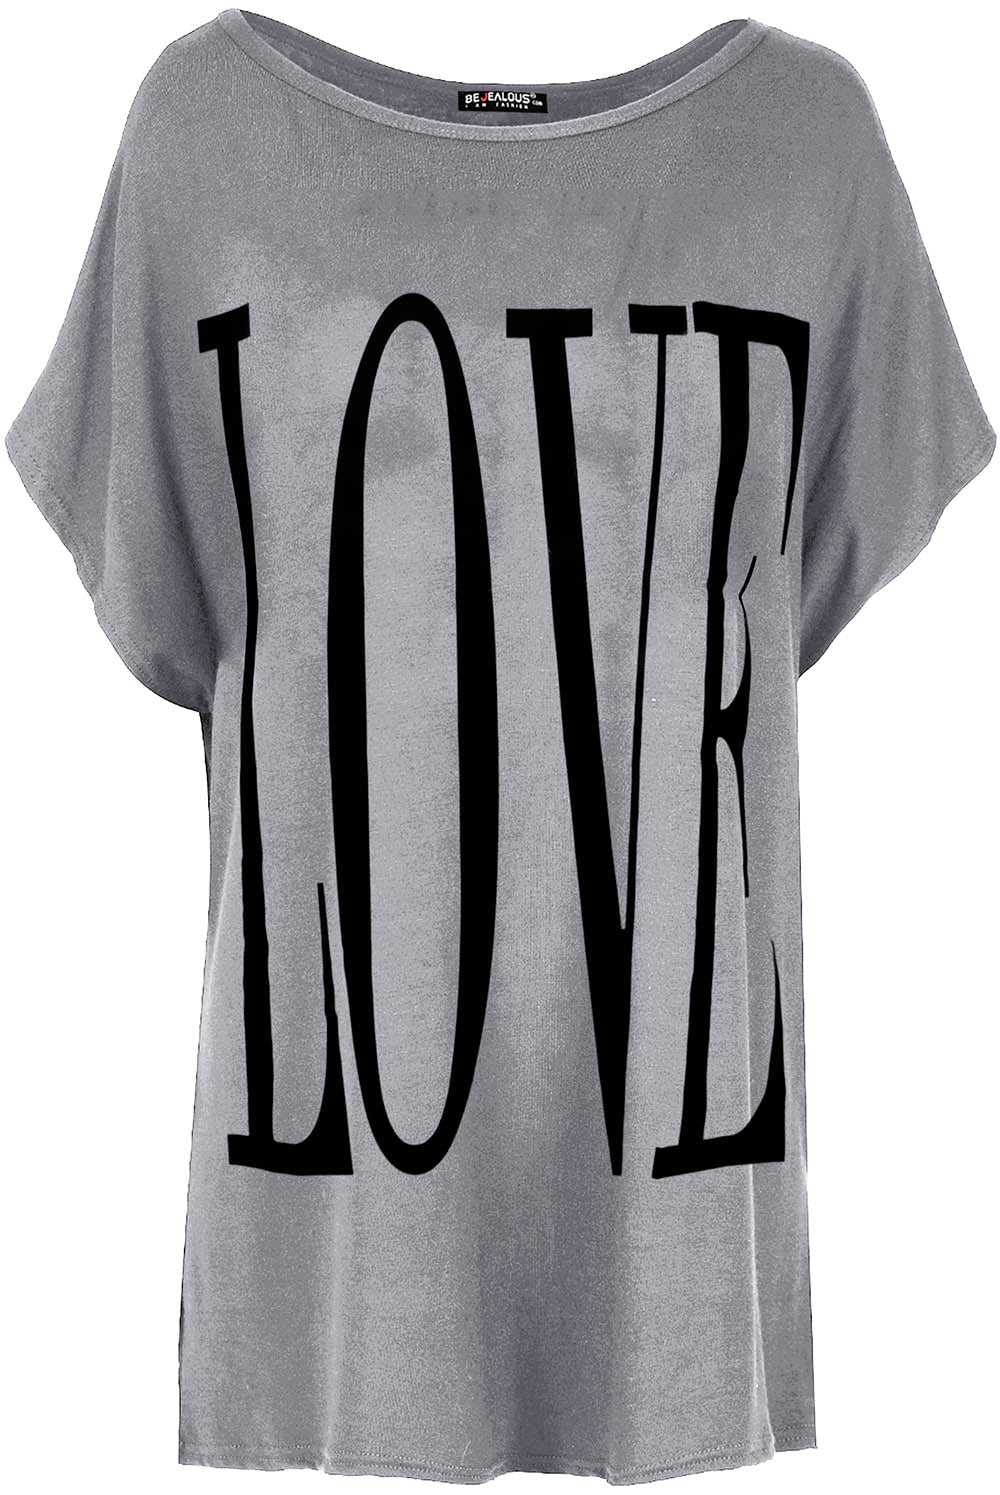 Love Slogan Print Navy Baggy Tshirt - bejealous-com